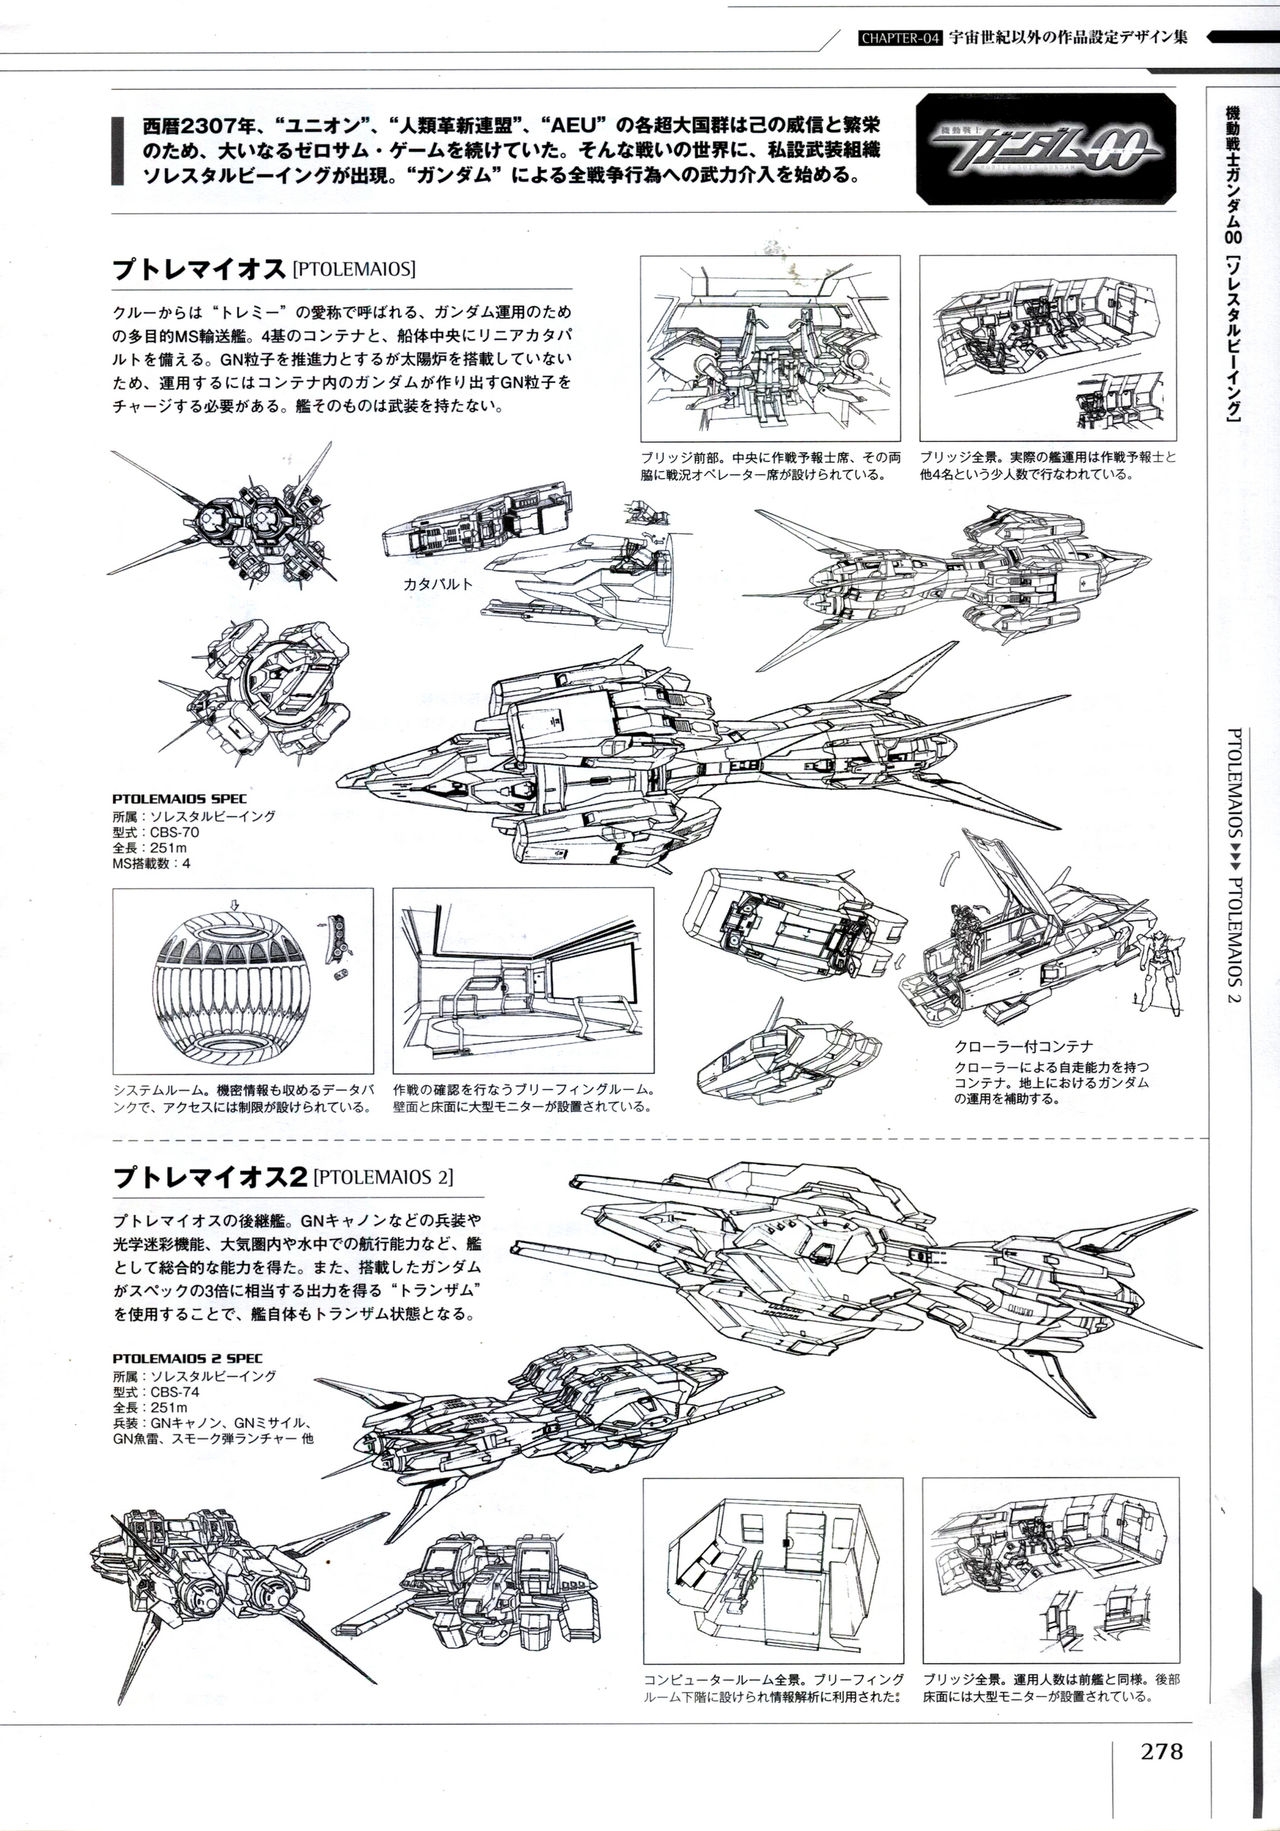 Mobile Suit Gundam - Ship & Aerospace Plane Encyclopedia - Revised Edition 283